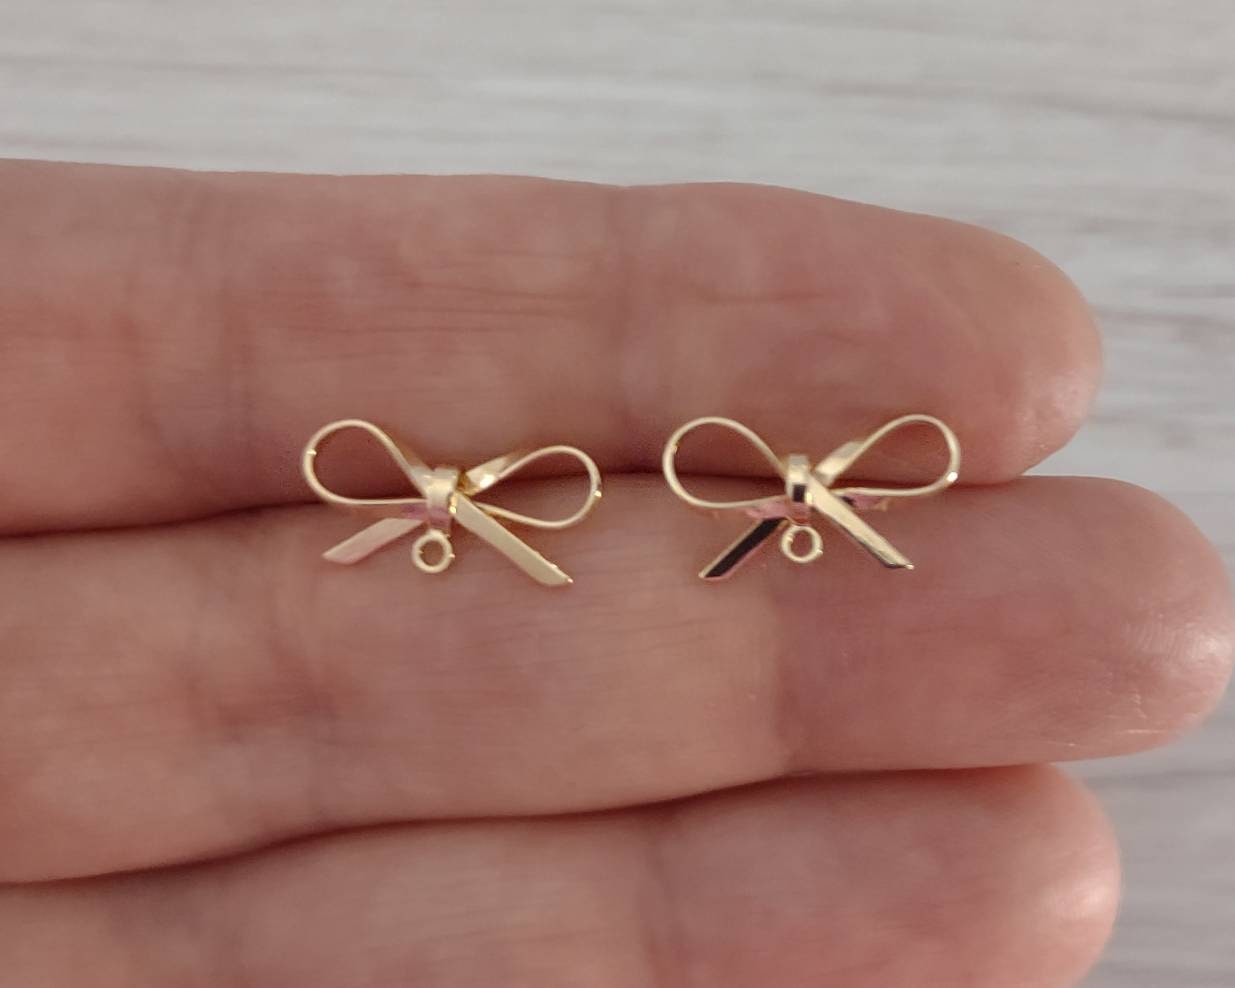 10pcs Cubic Zirconia Stud Posts Rhinestone Loop Earrings Post Jewelry Making  Fin